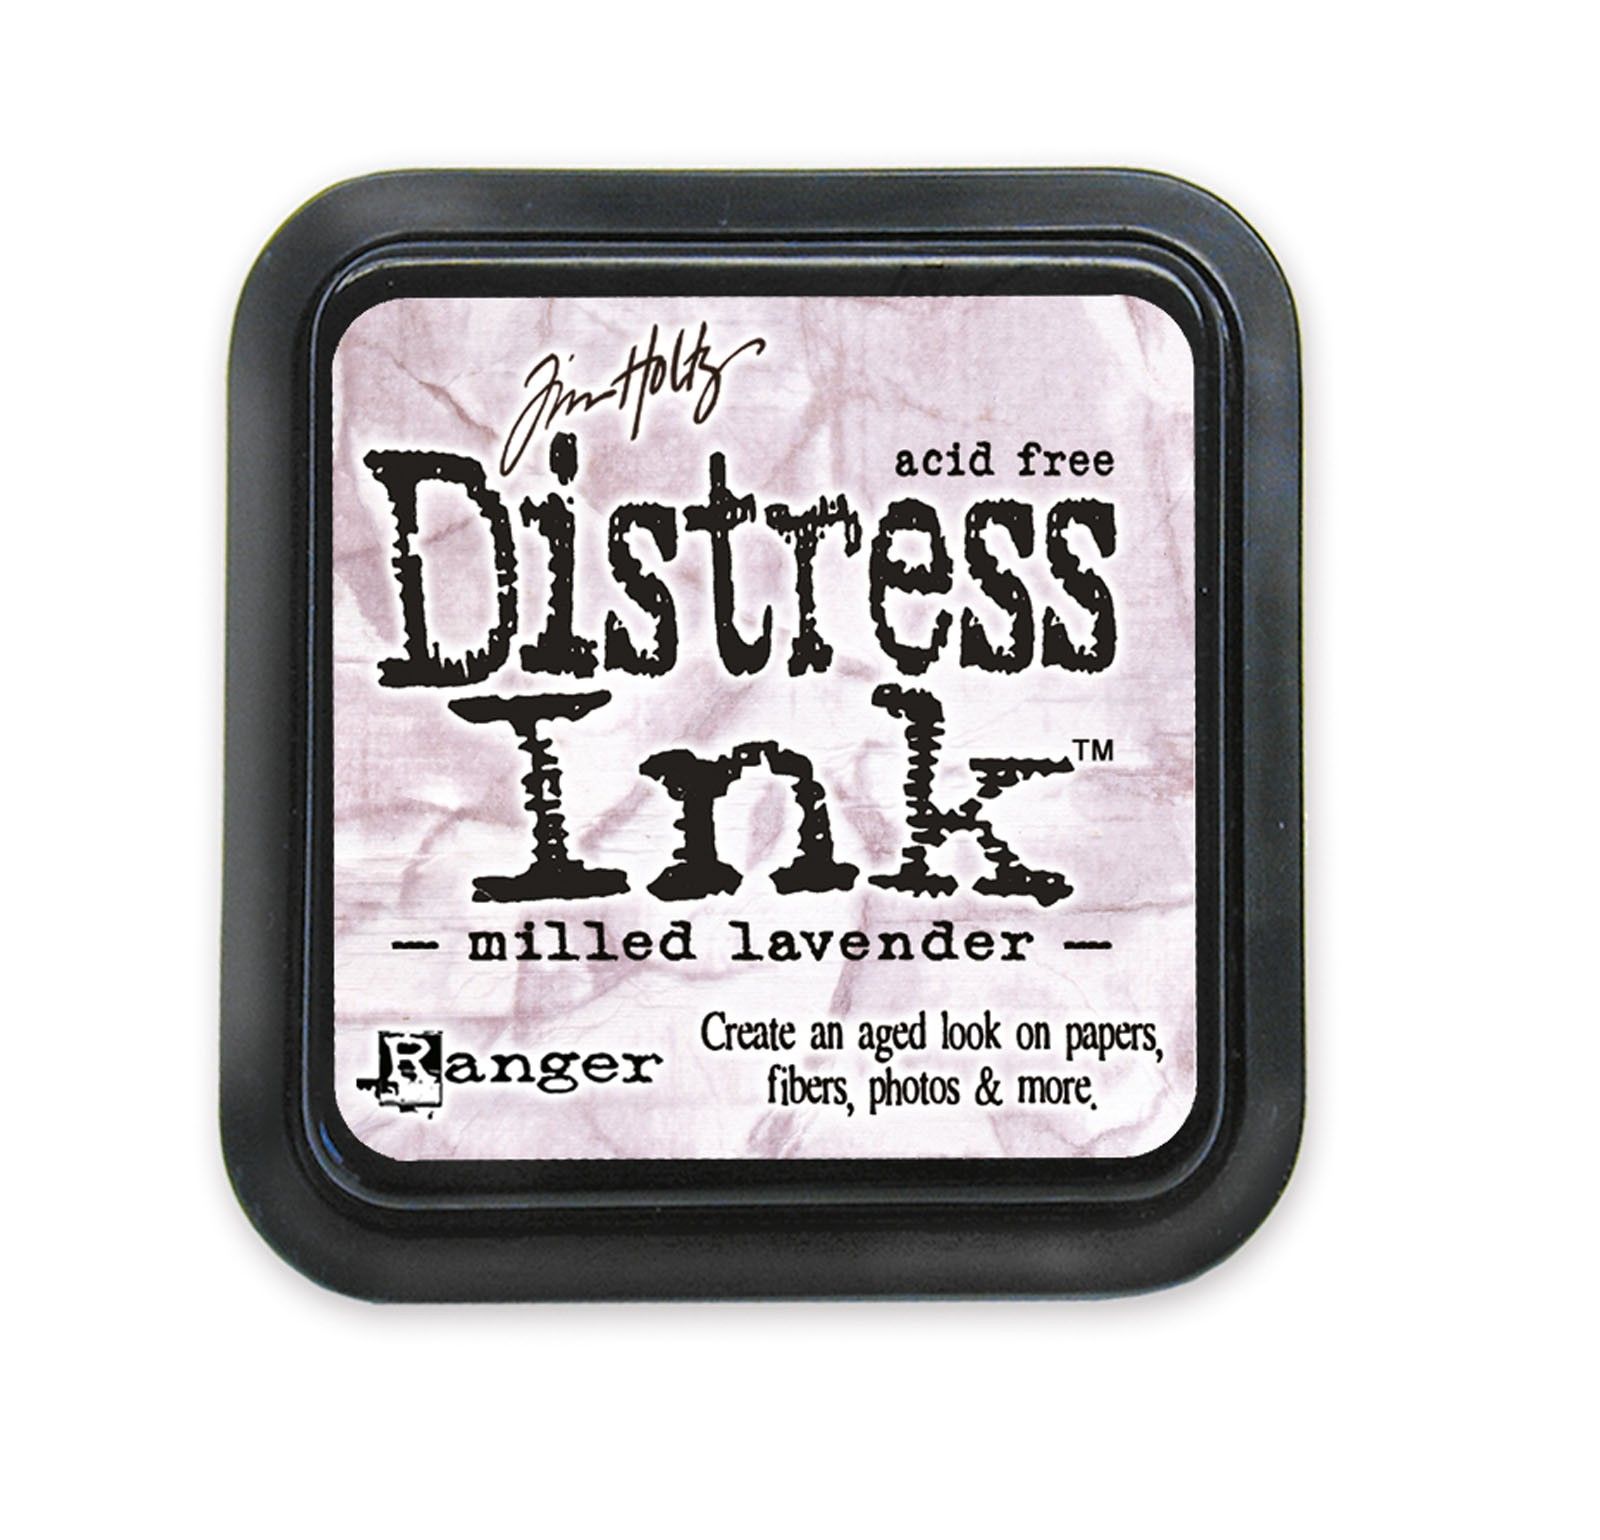 Tim Holtz Distress Ink Pad - Milled Lavender